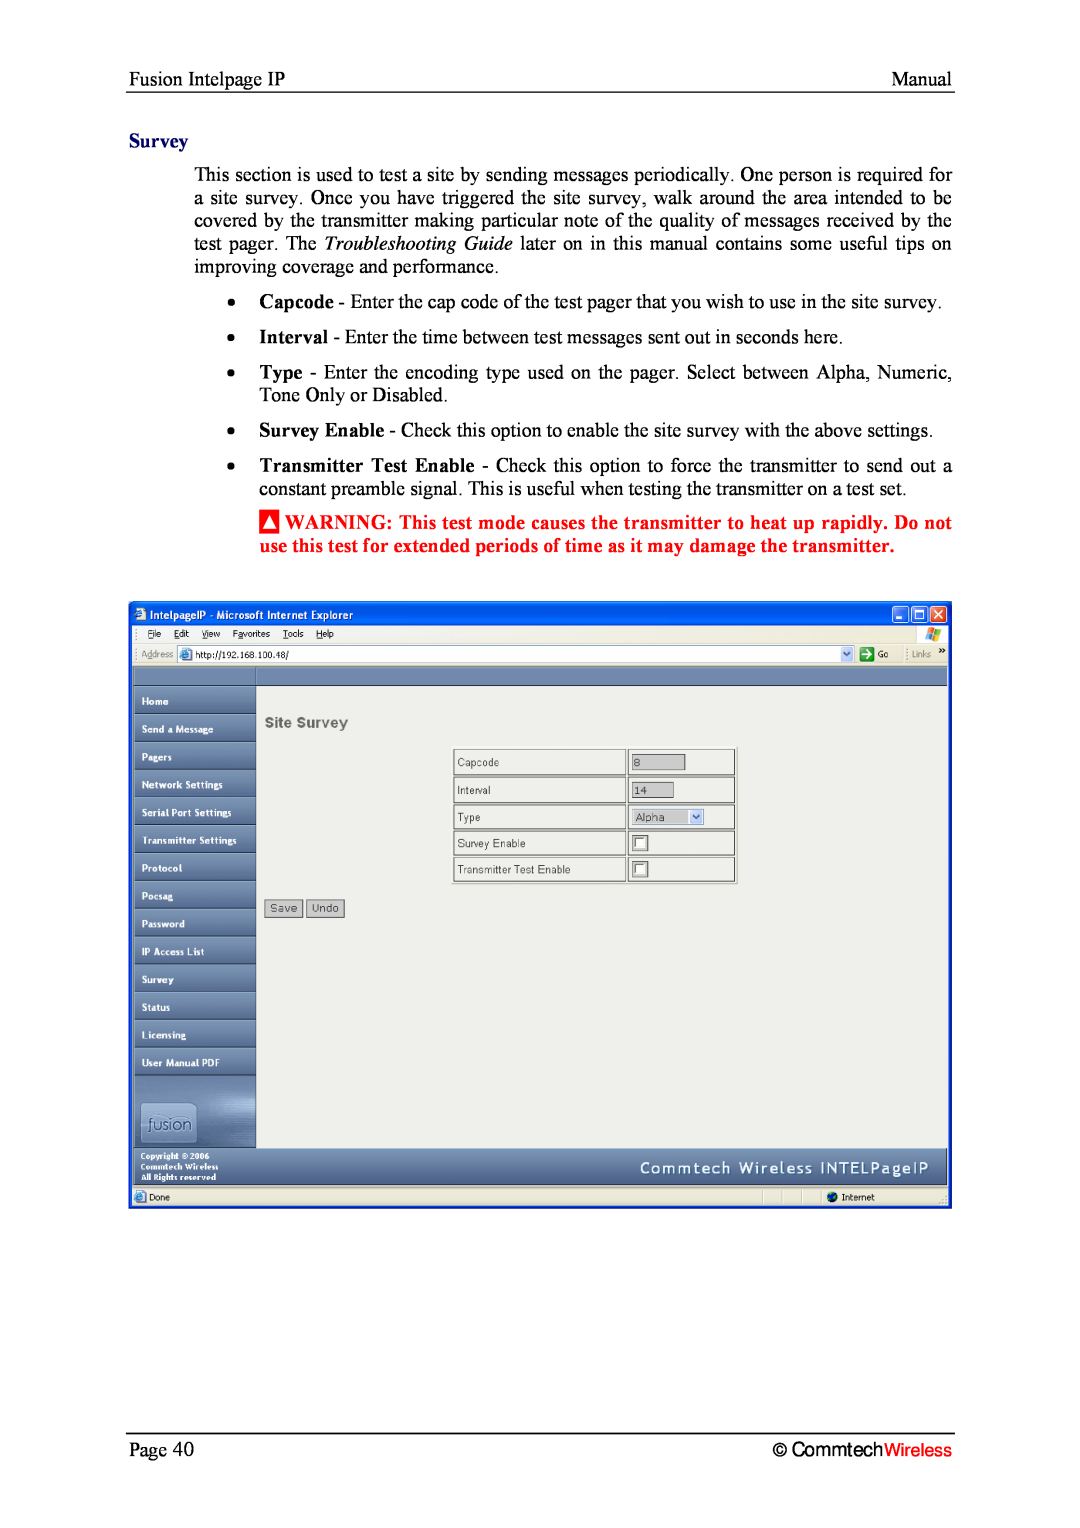 Fusion 2.1, INTELPage IP 5 manual Survey, CommtechWireless 